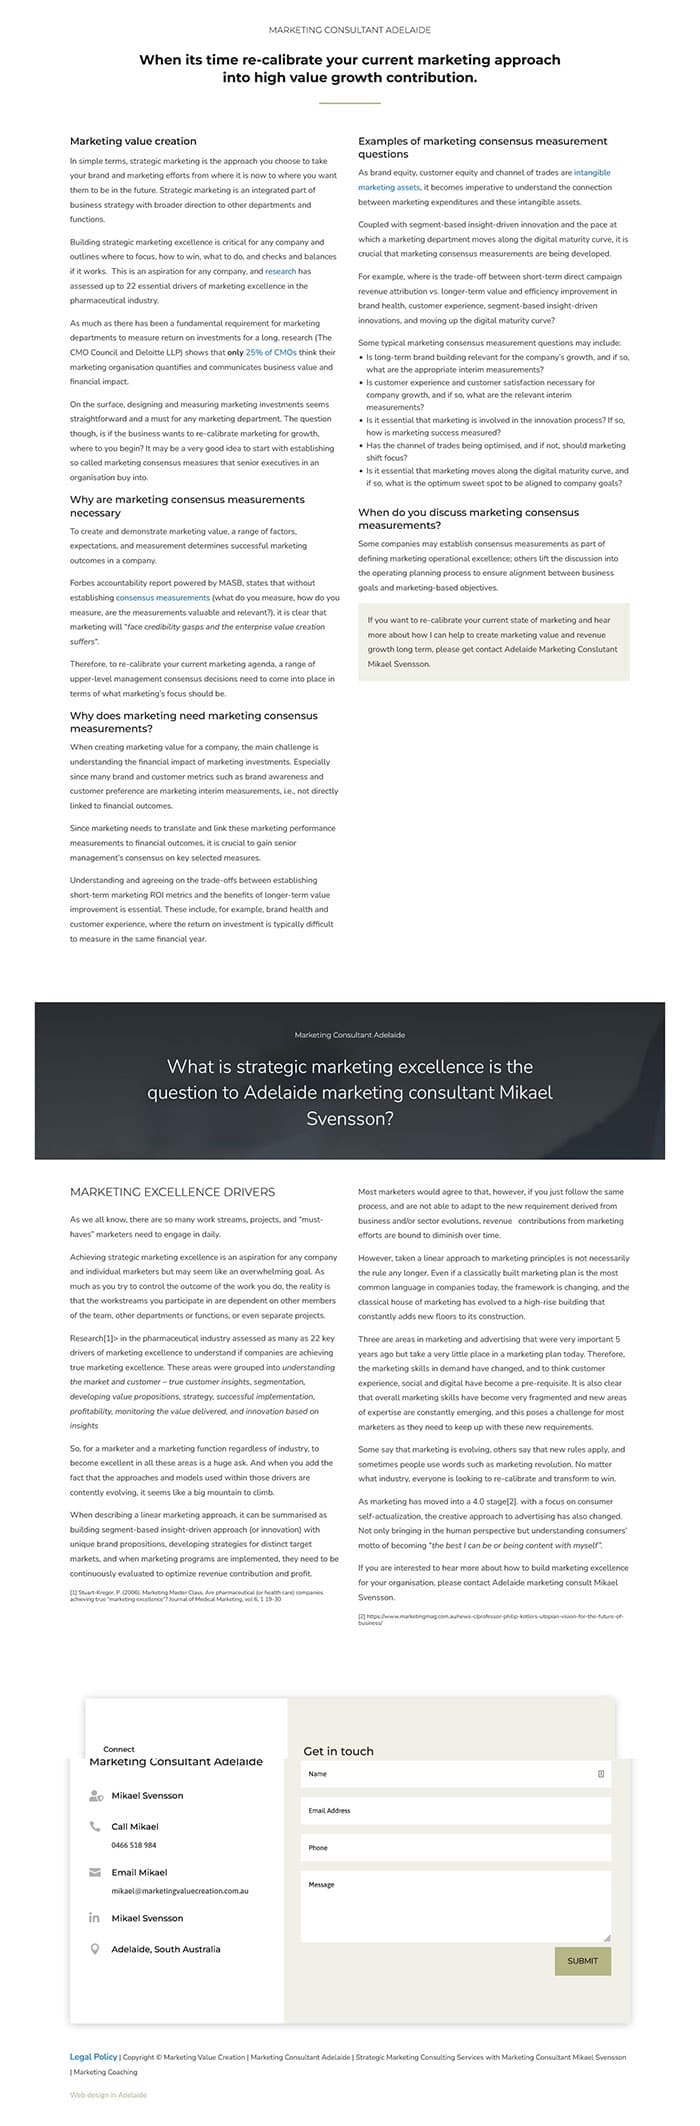 website design for marketing consultant in Adelaide